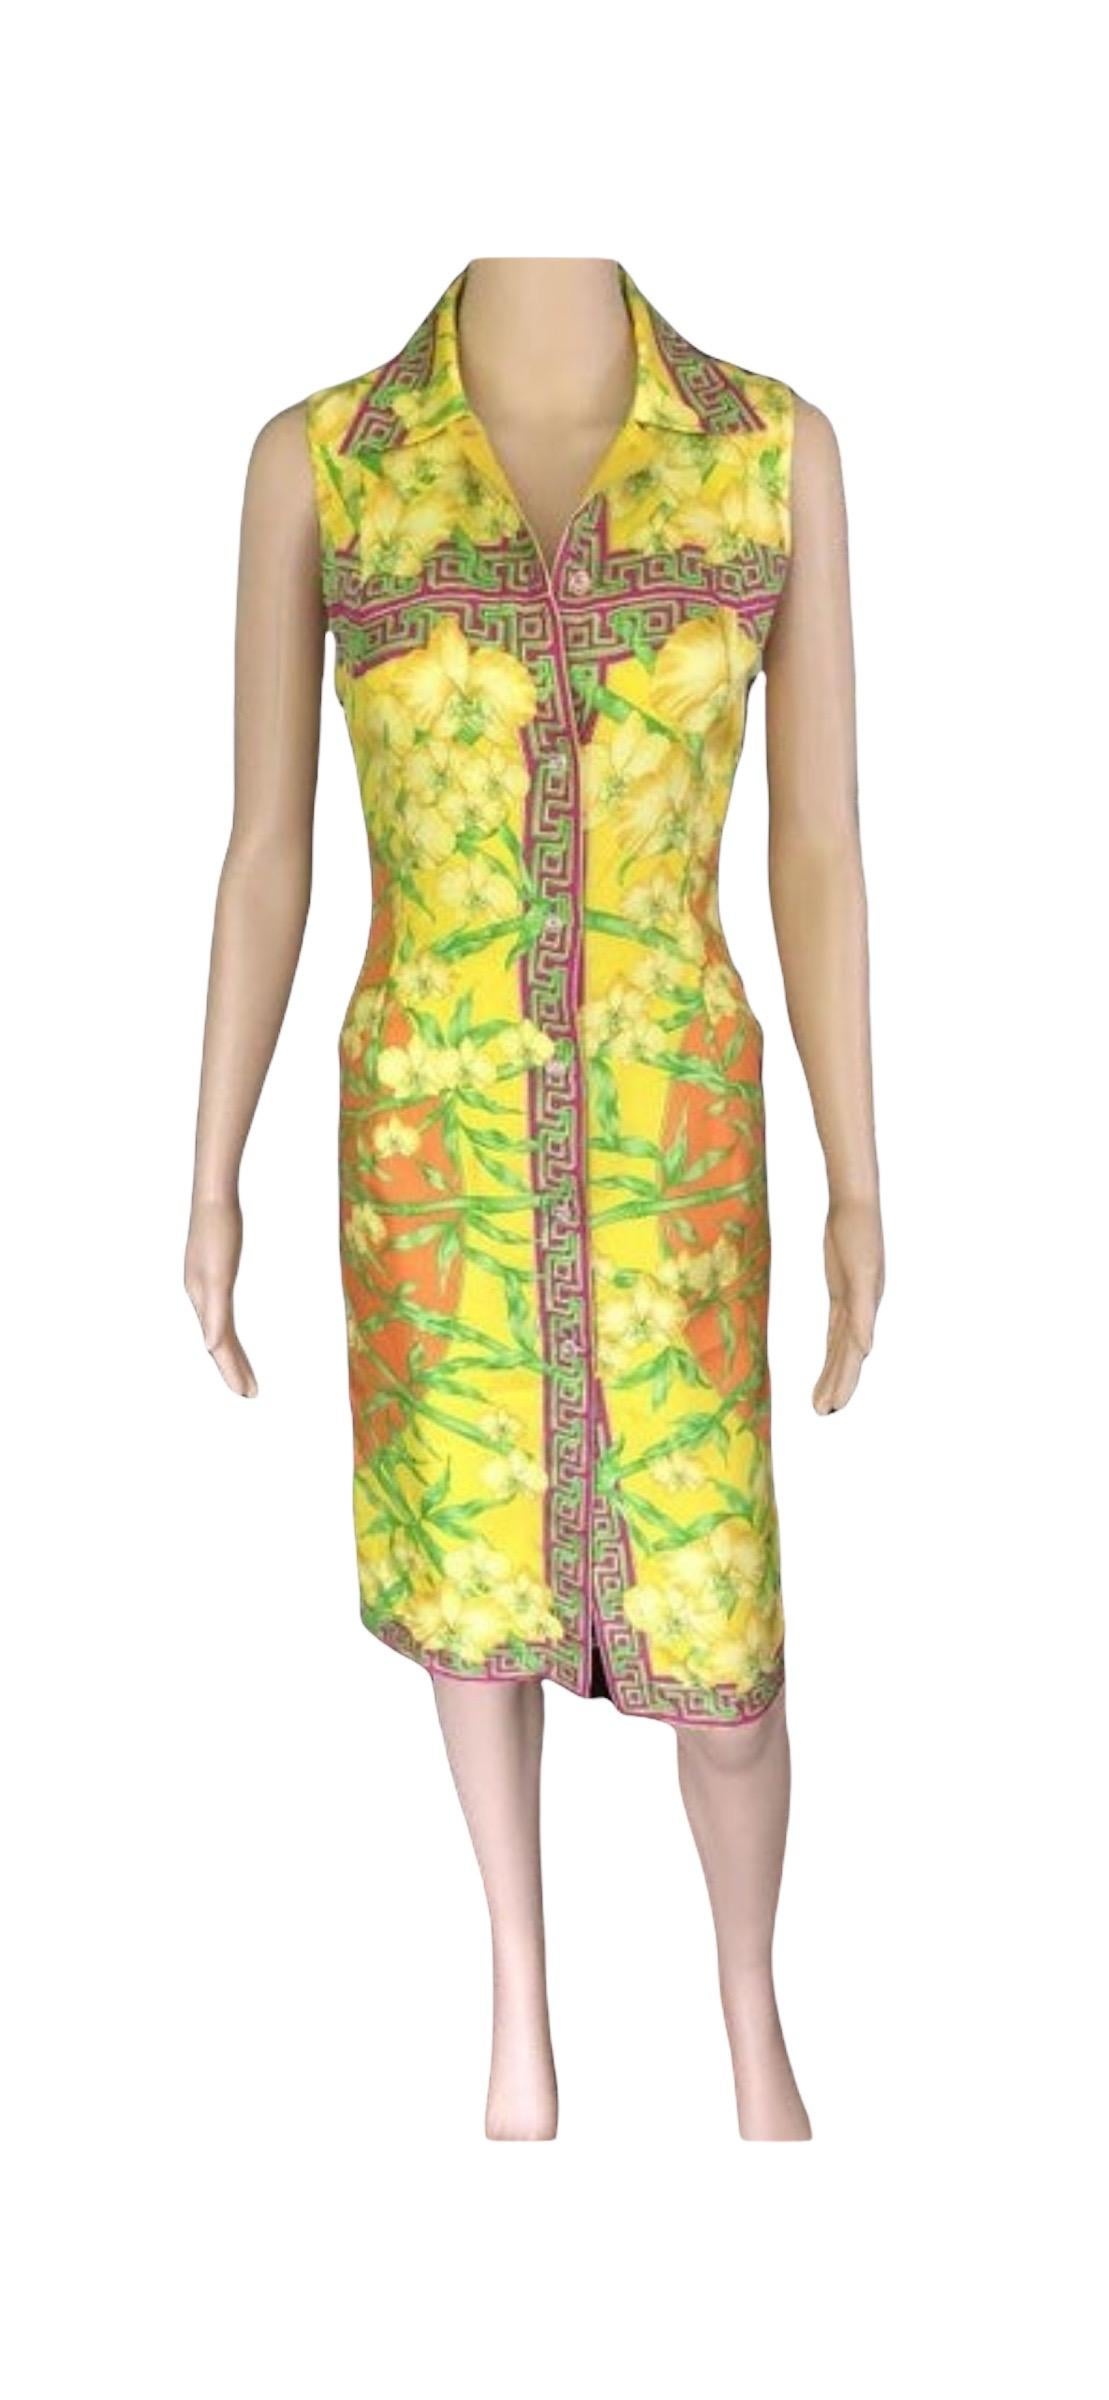 Gianni Versace S/S 2000 Bamboo Print Silk Dress  For Sale 1